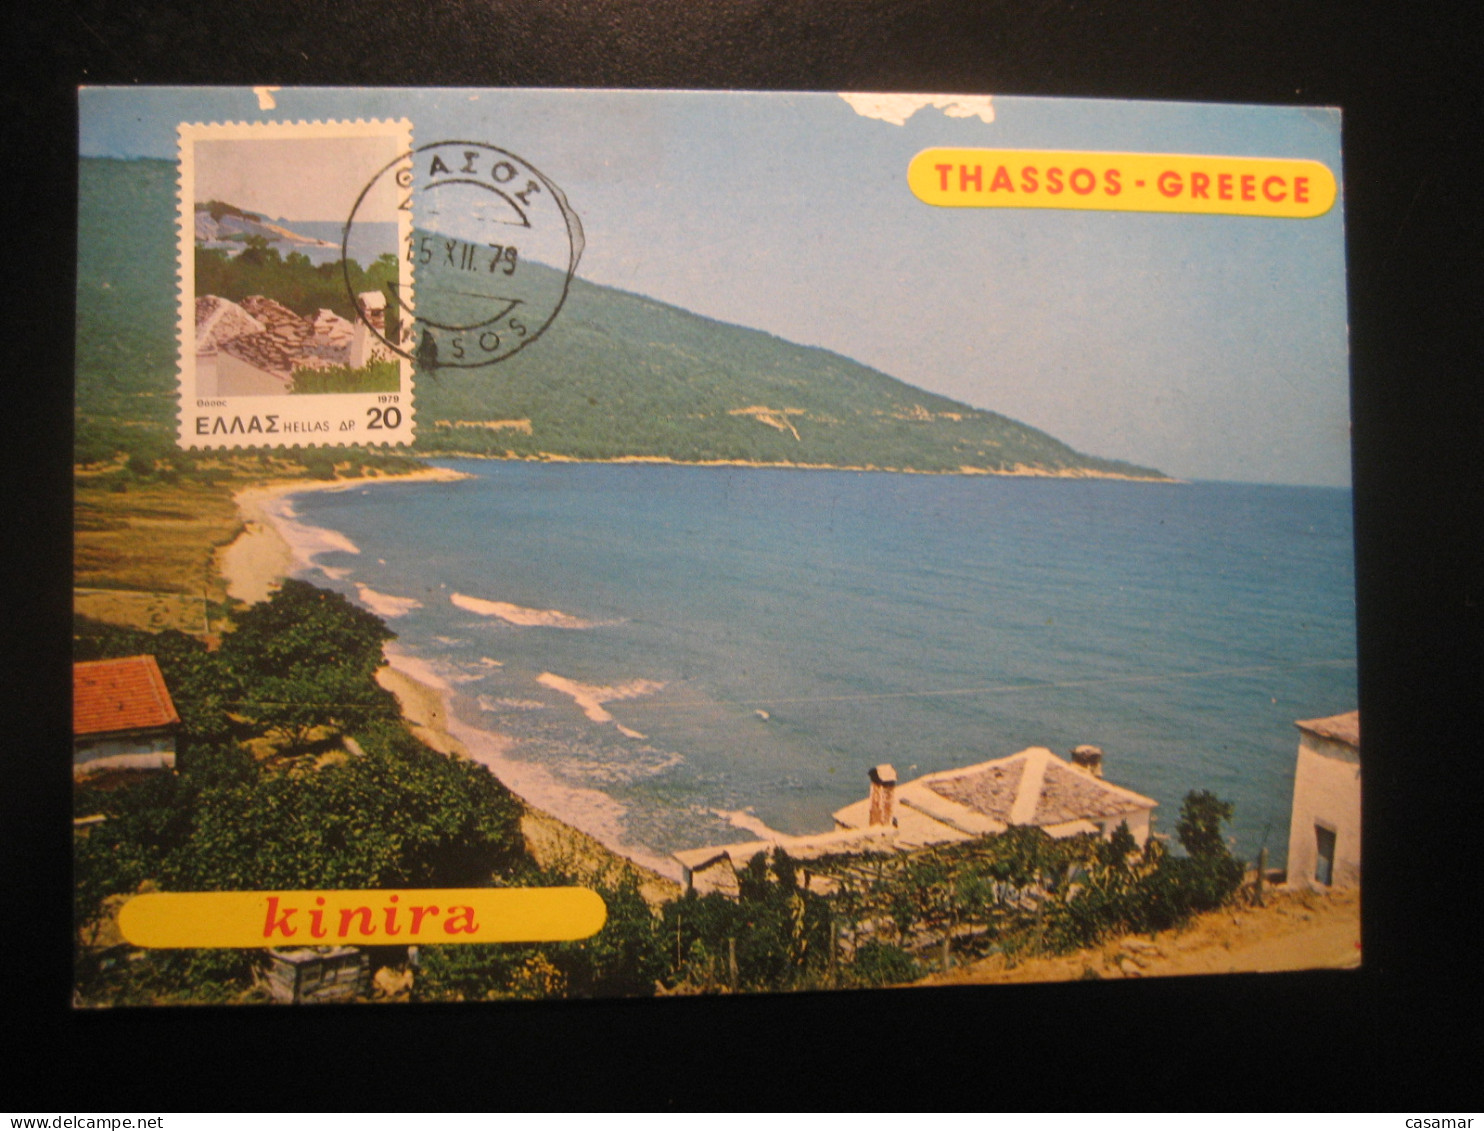 THASSOS Island 1979 Kinira Maxi Maximum Card GREECE - Storia Postale